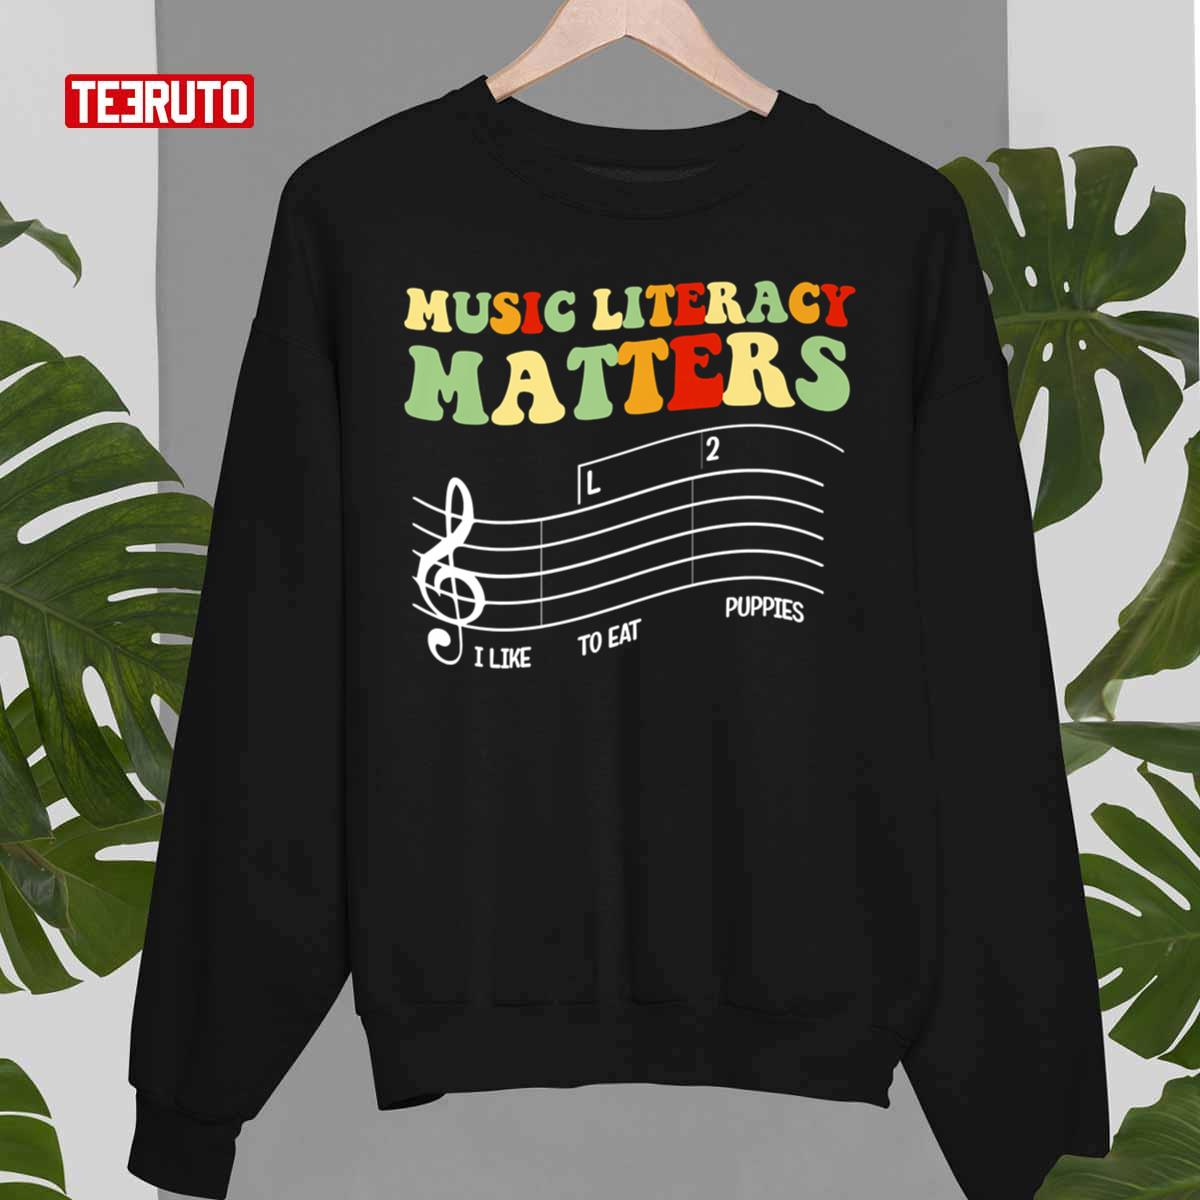 Music Literacy Matters I Like To Eat Puppies Unisex T-Shirt